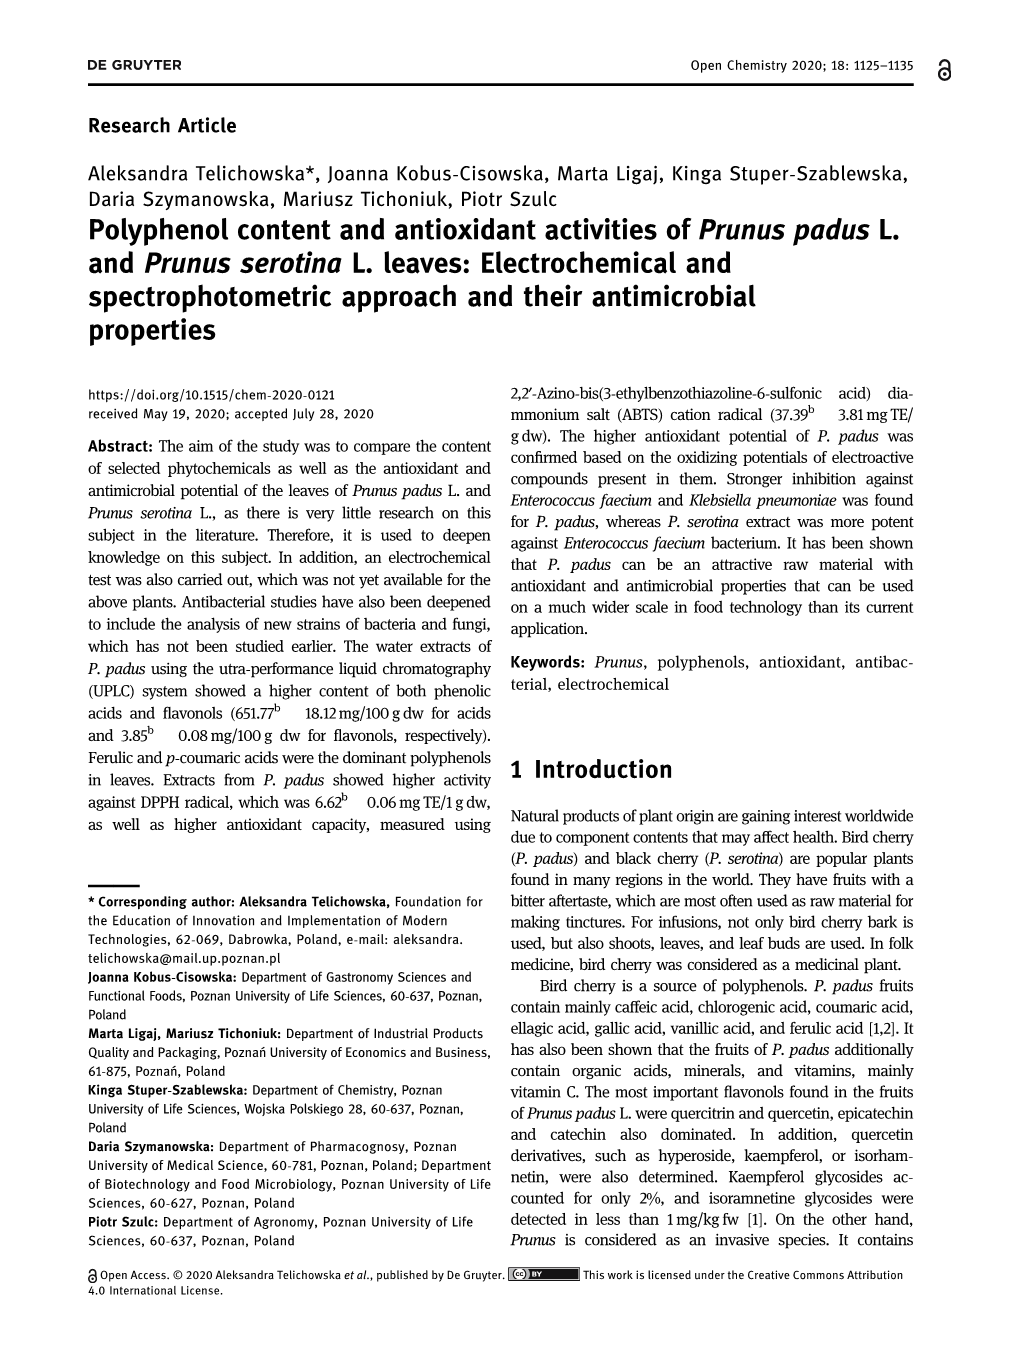 Polyphenol Content and Antioxidant Activities of Prunus Padus L. and Prunus Serotina L